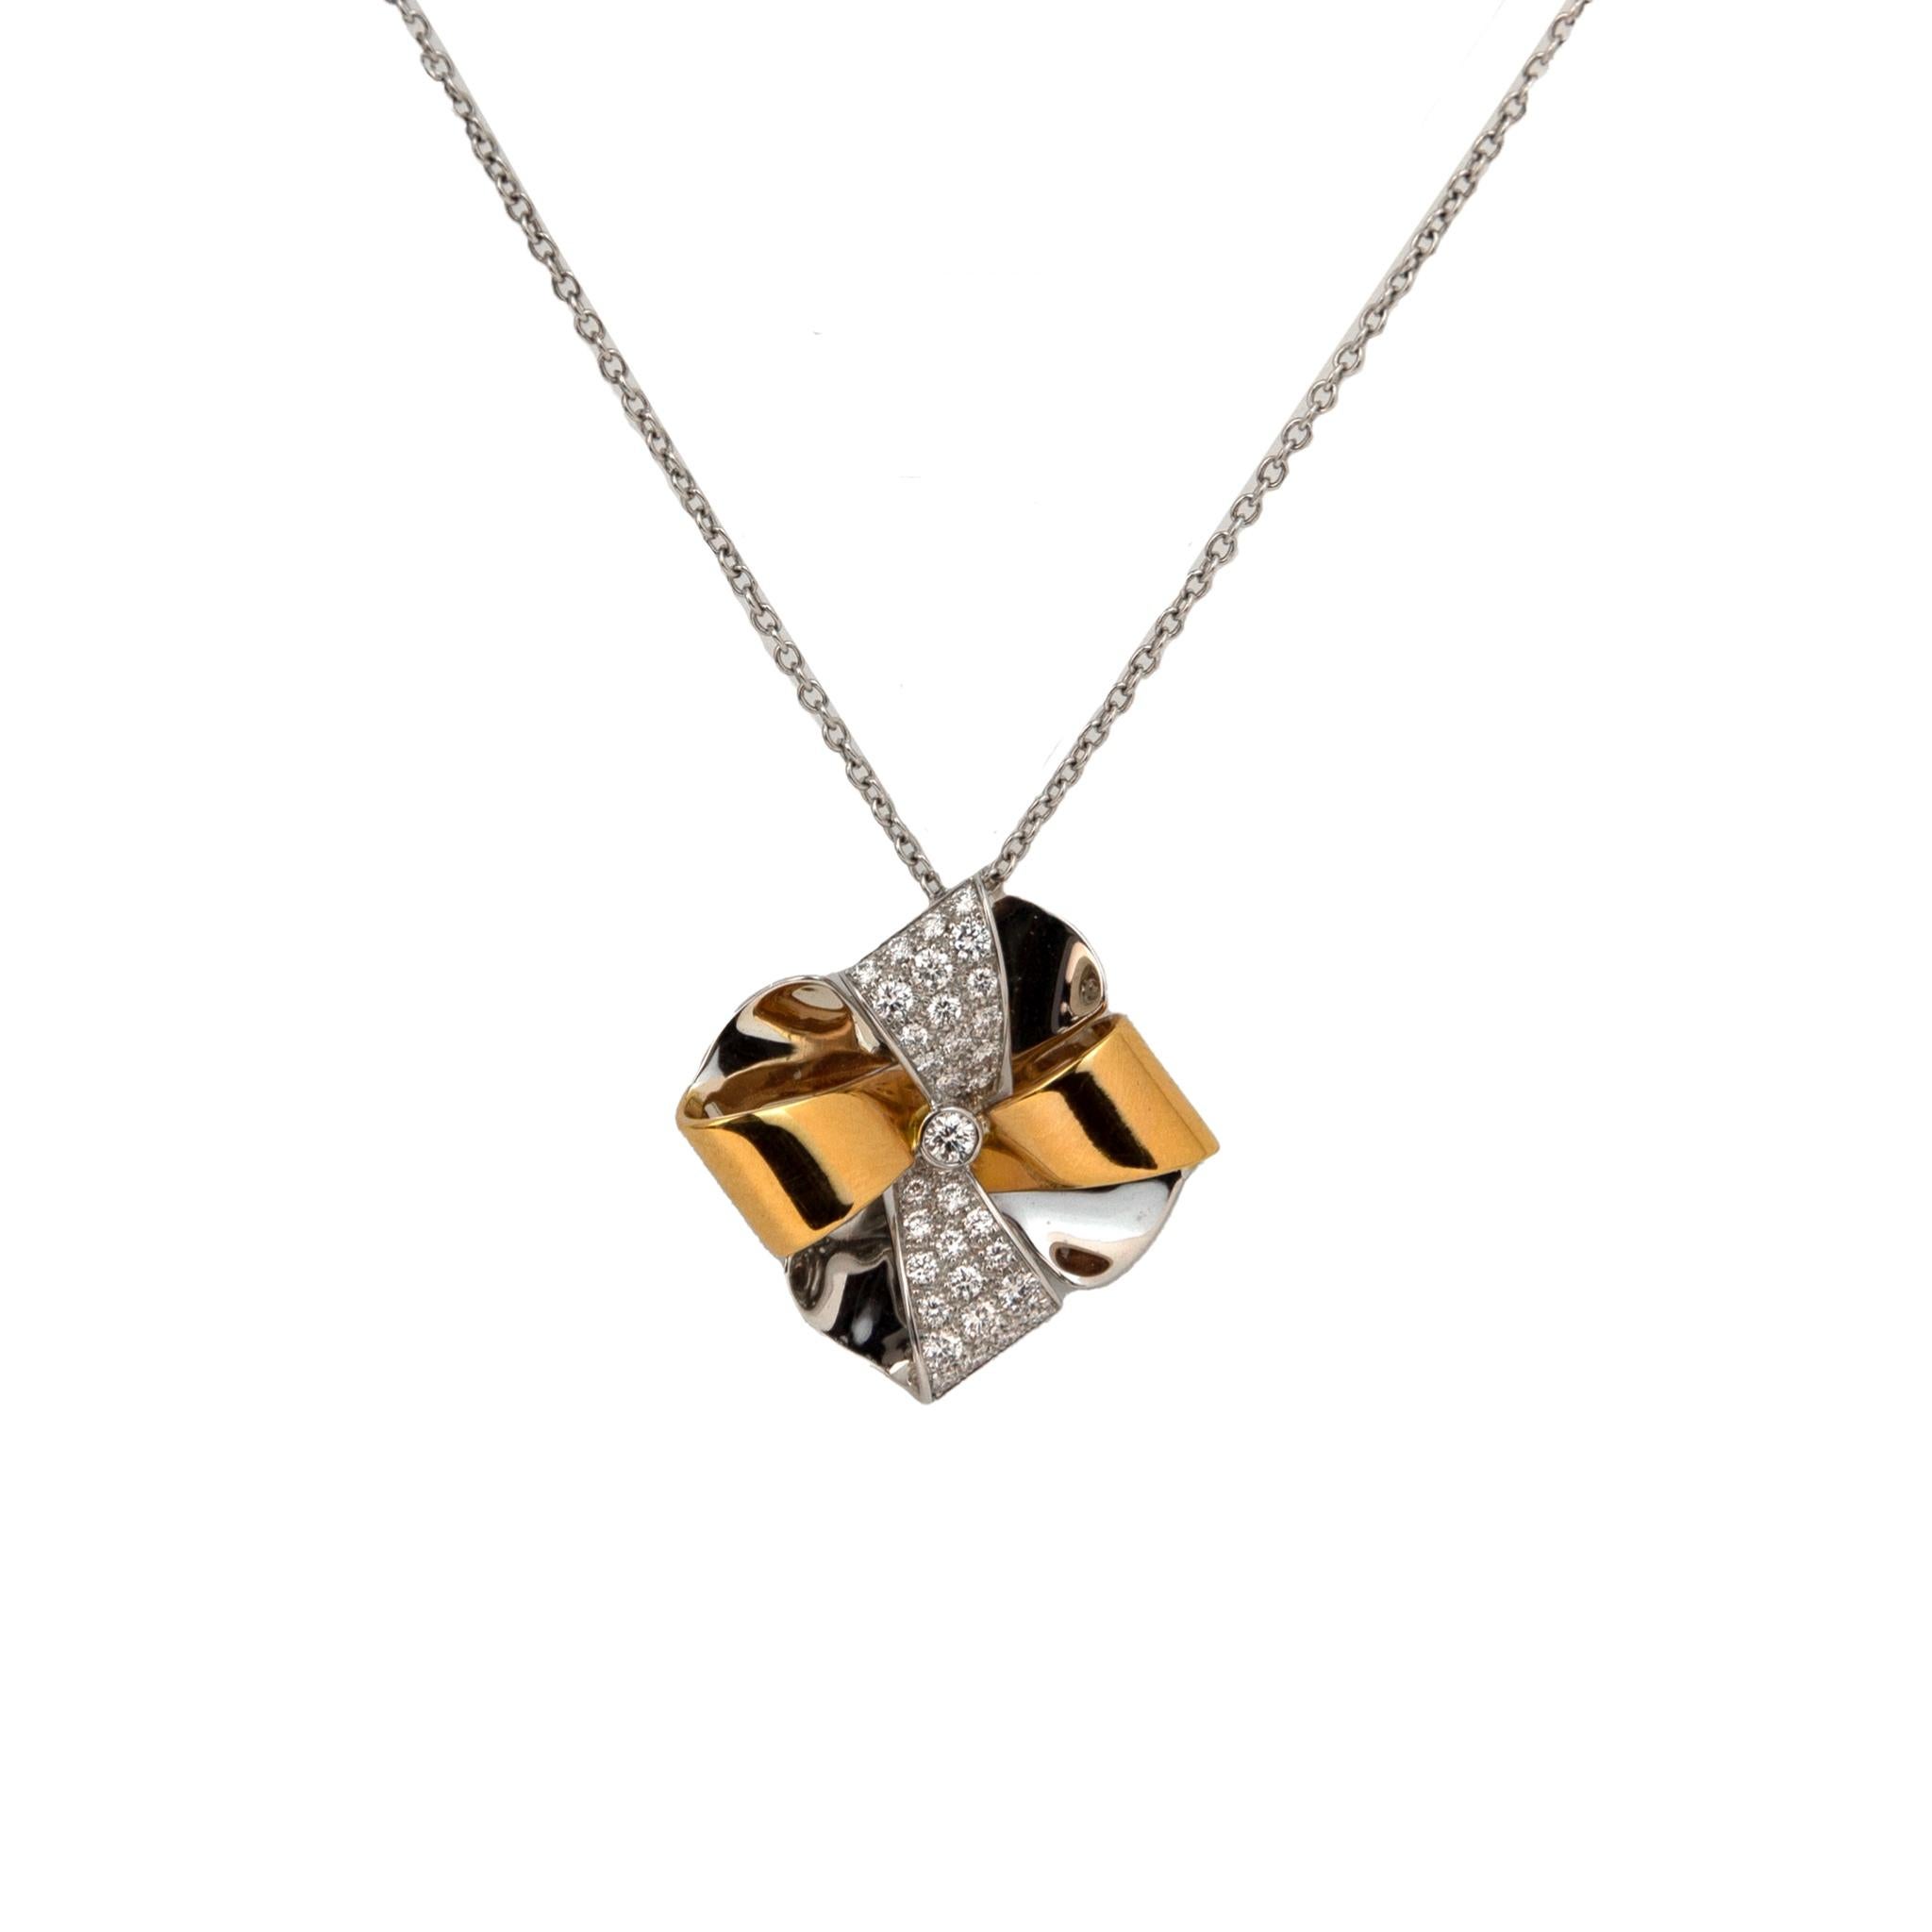 Luca Carati Bow-Knot Pendant Necklace
18K White & Rose Gold
Diamond: 0.91ctw
SKU: LC01023
Retail price: $5,150.00